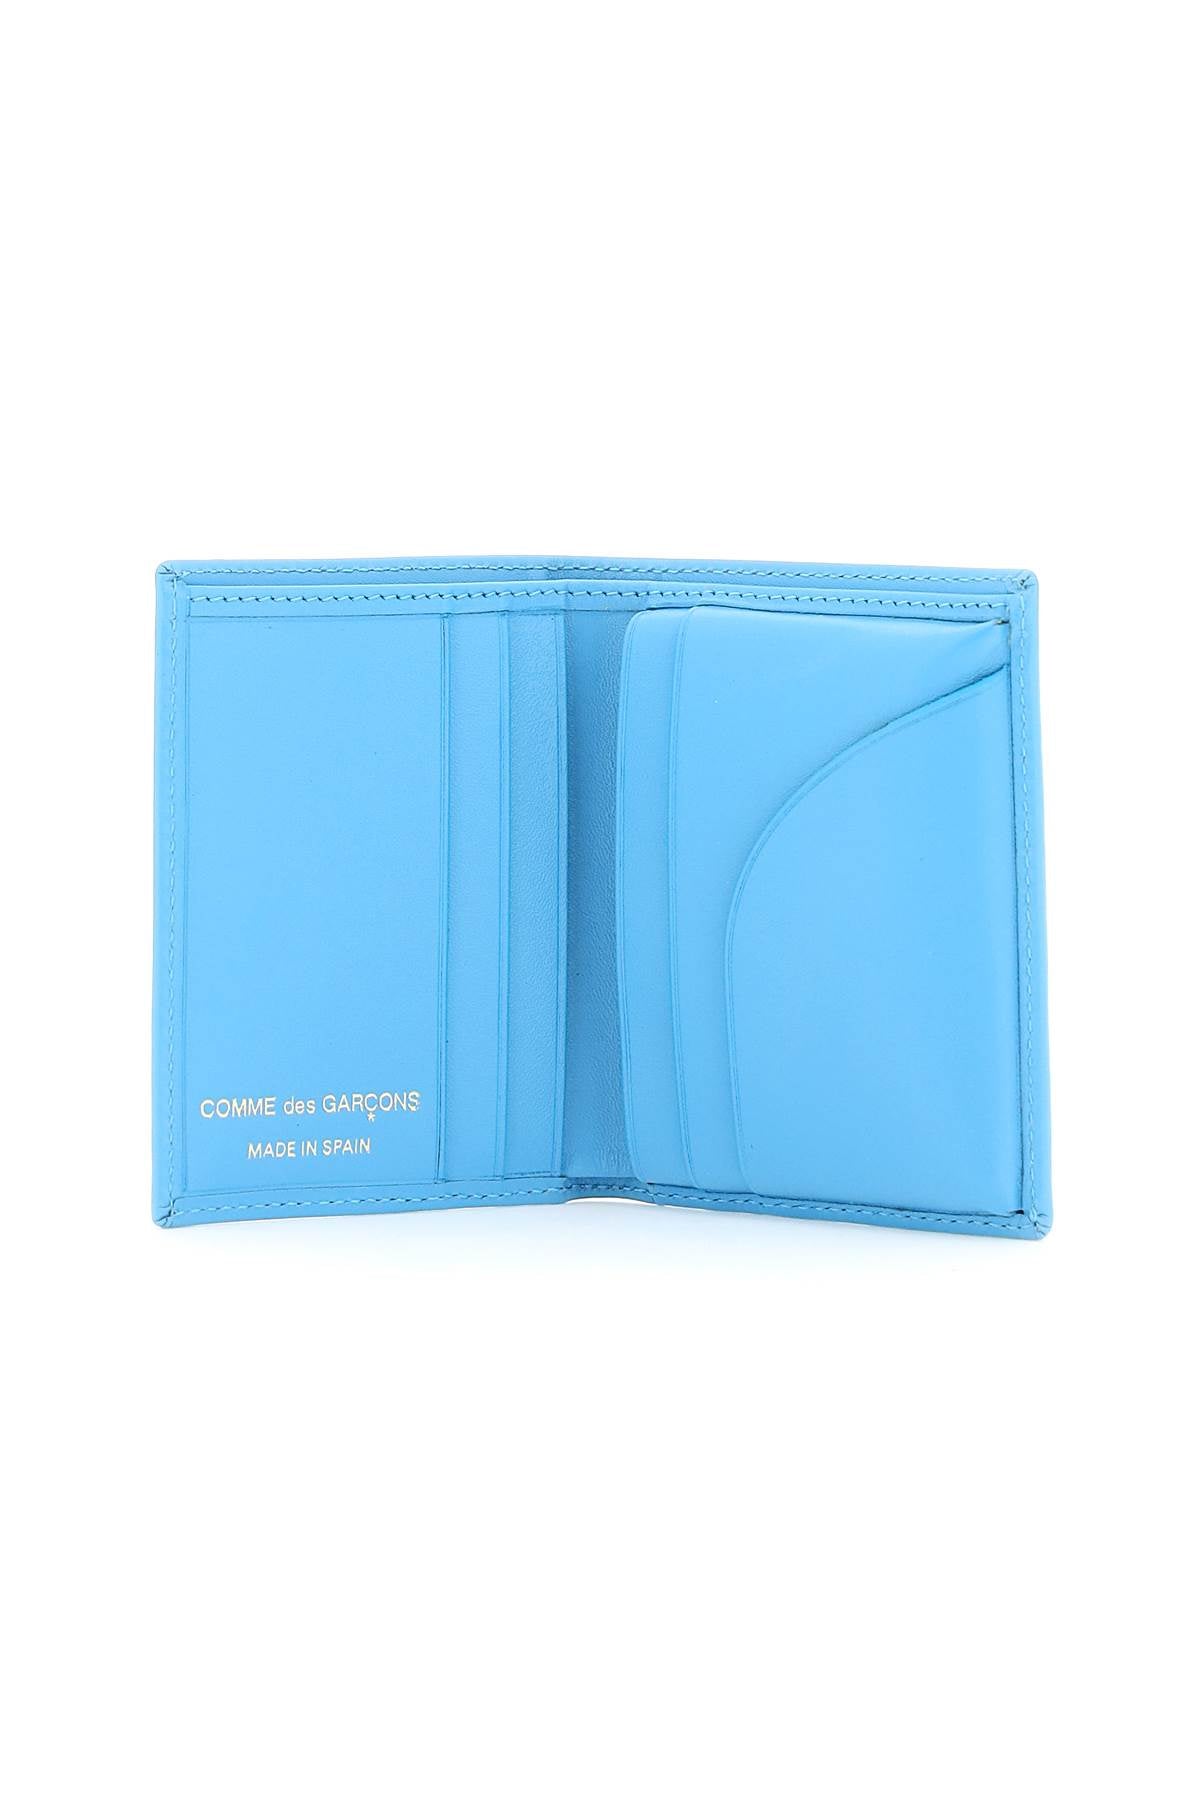 Comme Des Garcons Wallet Comme des garcons wallet leather small bi-fold wallet